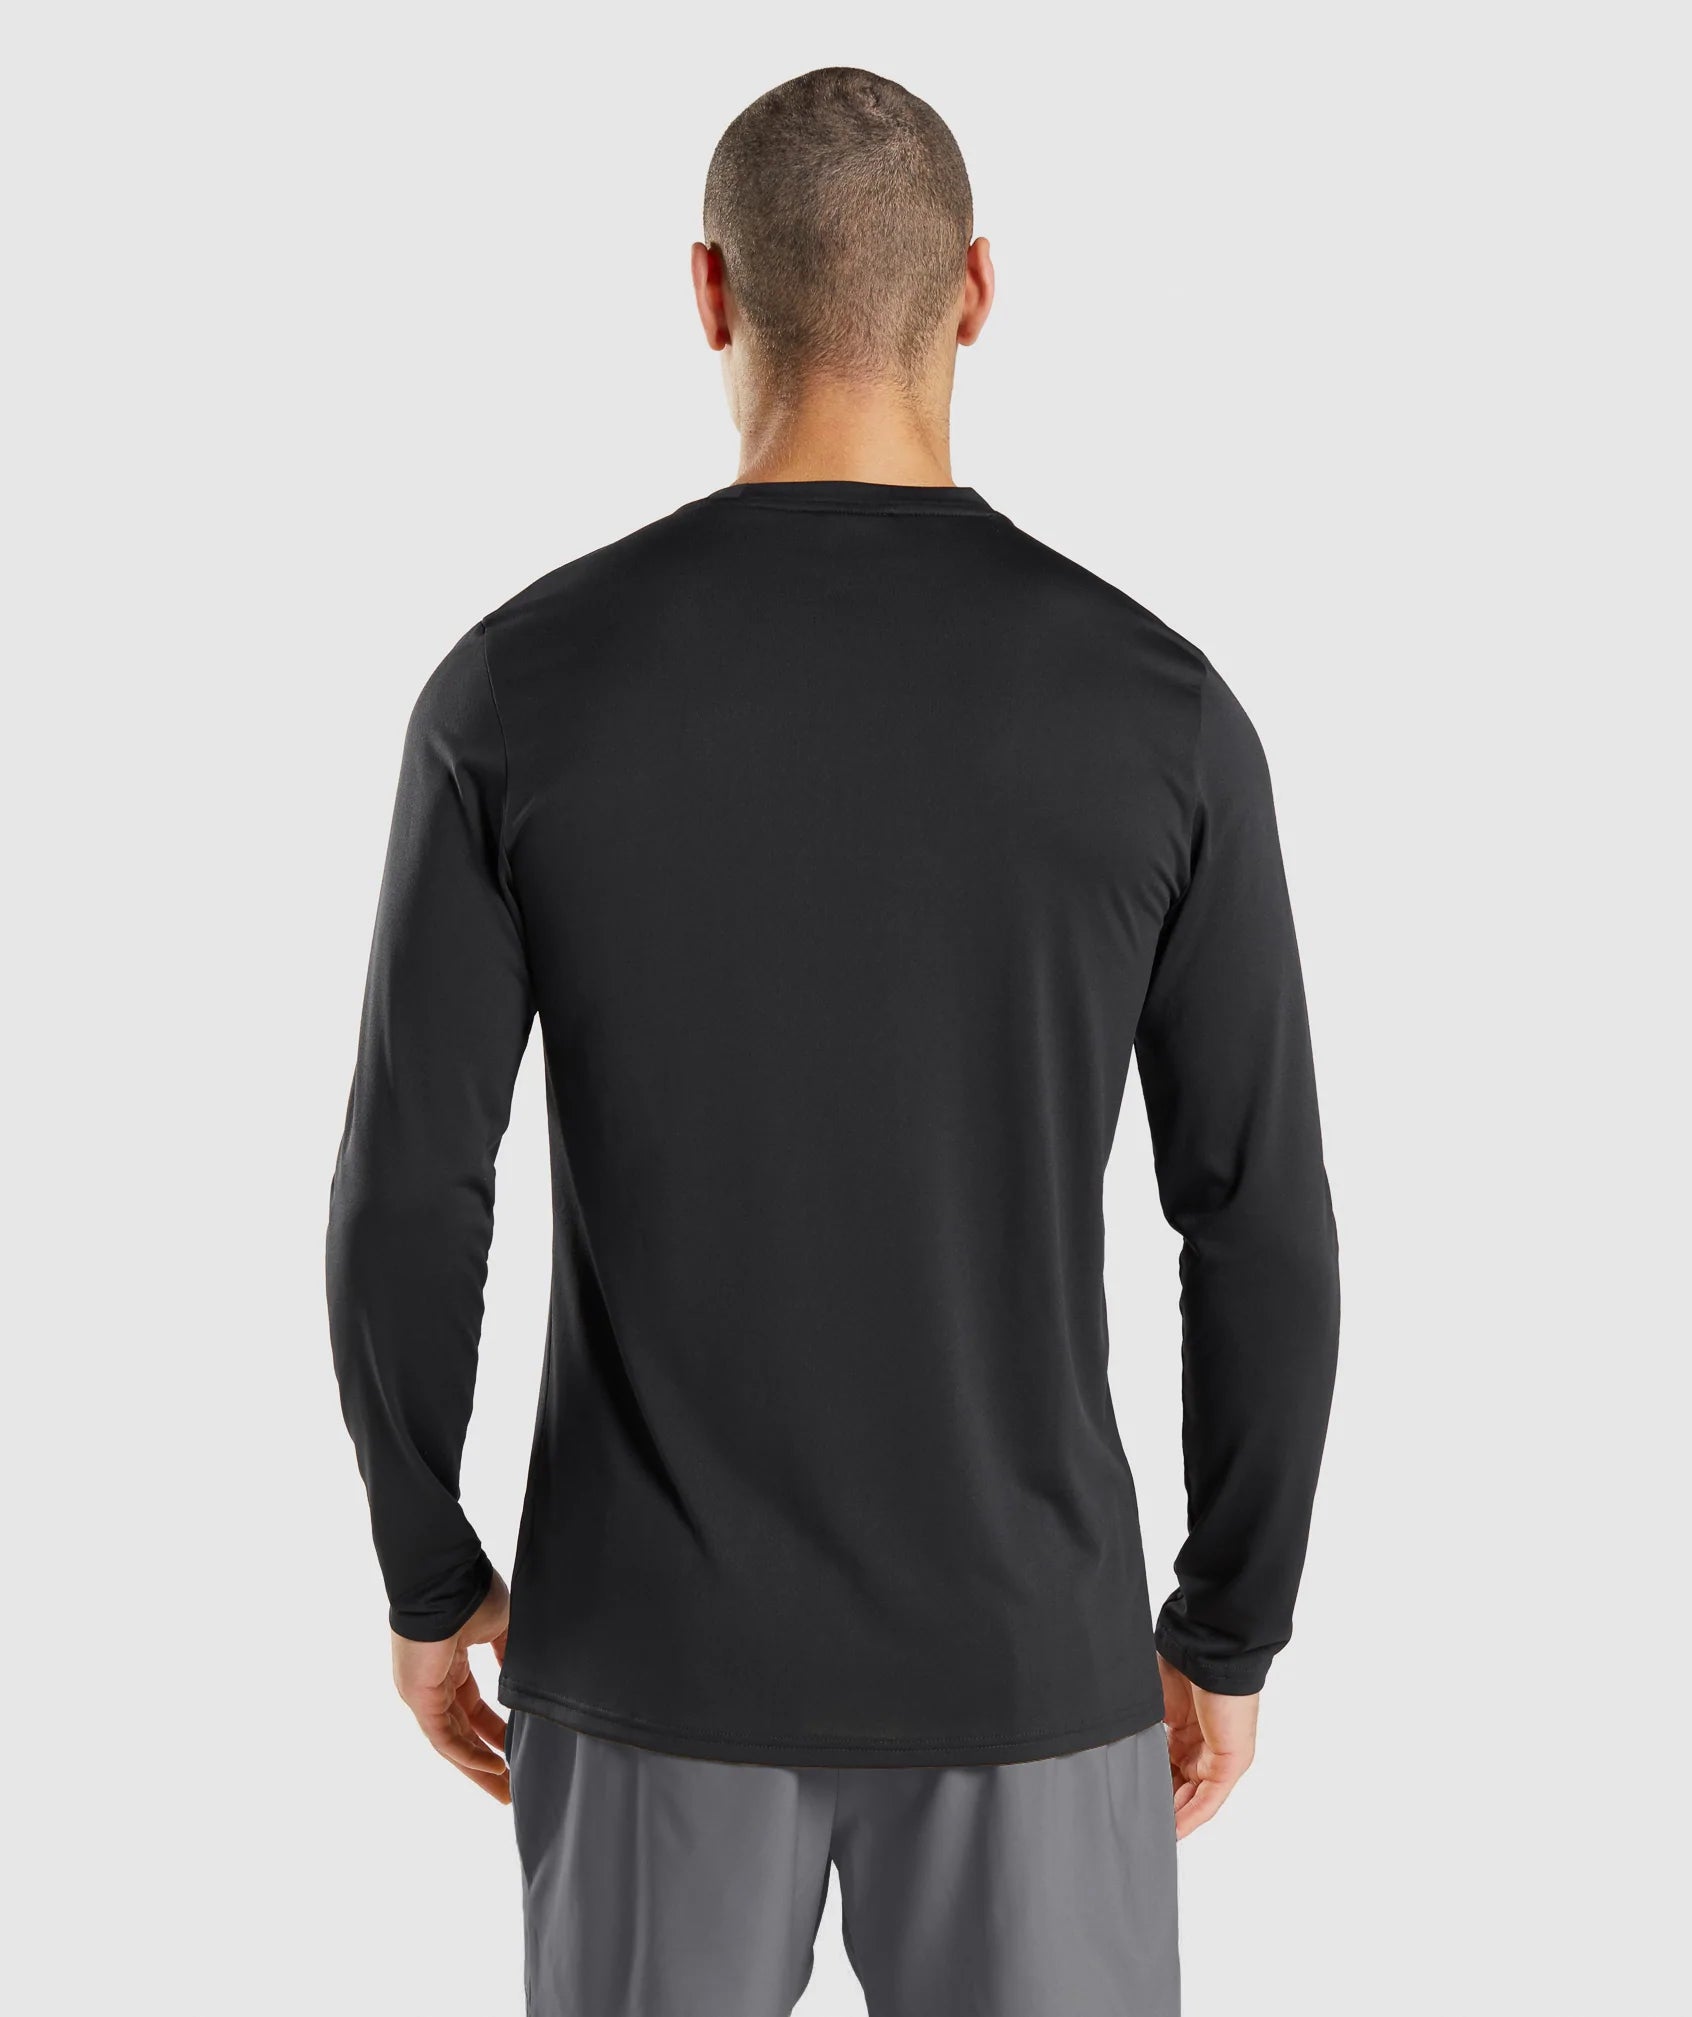 Gymshark Mens S Apollo Long Sleeve T-Shirt Black Crewneck Athletic